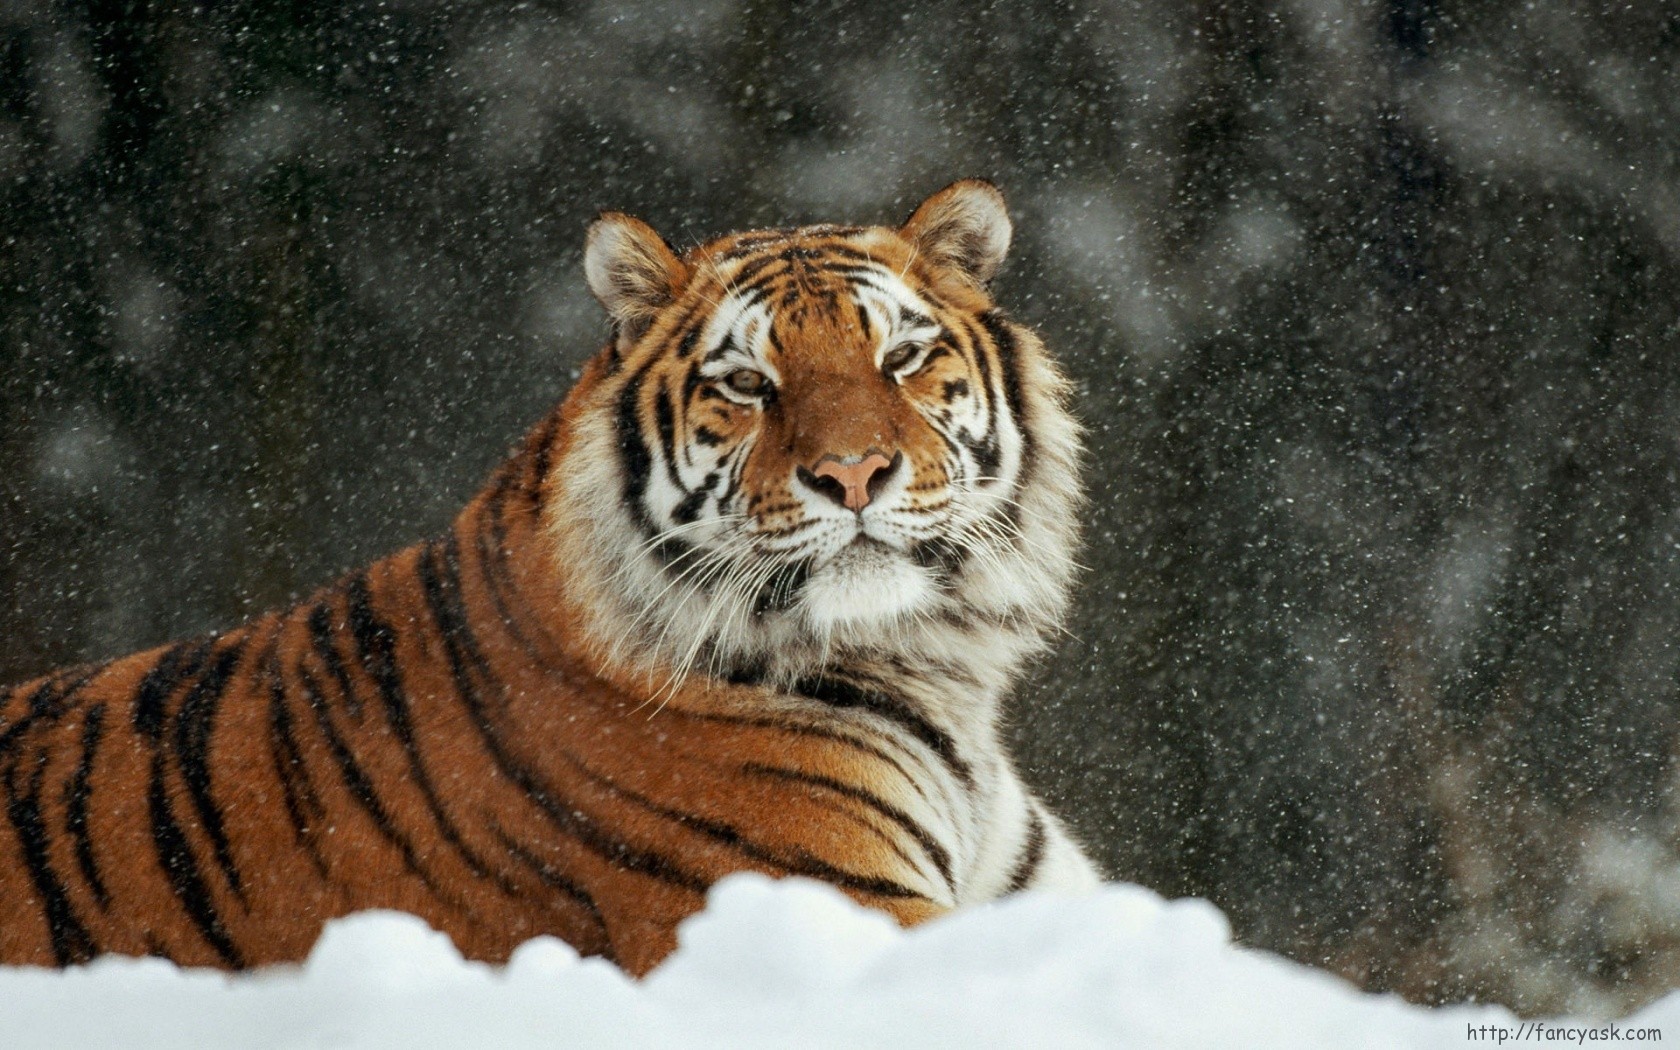 Characteristics of the Amur tiger